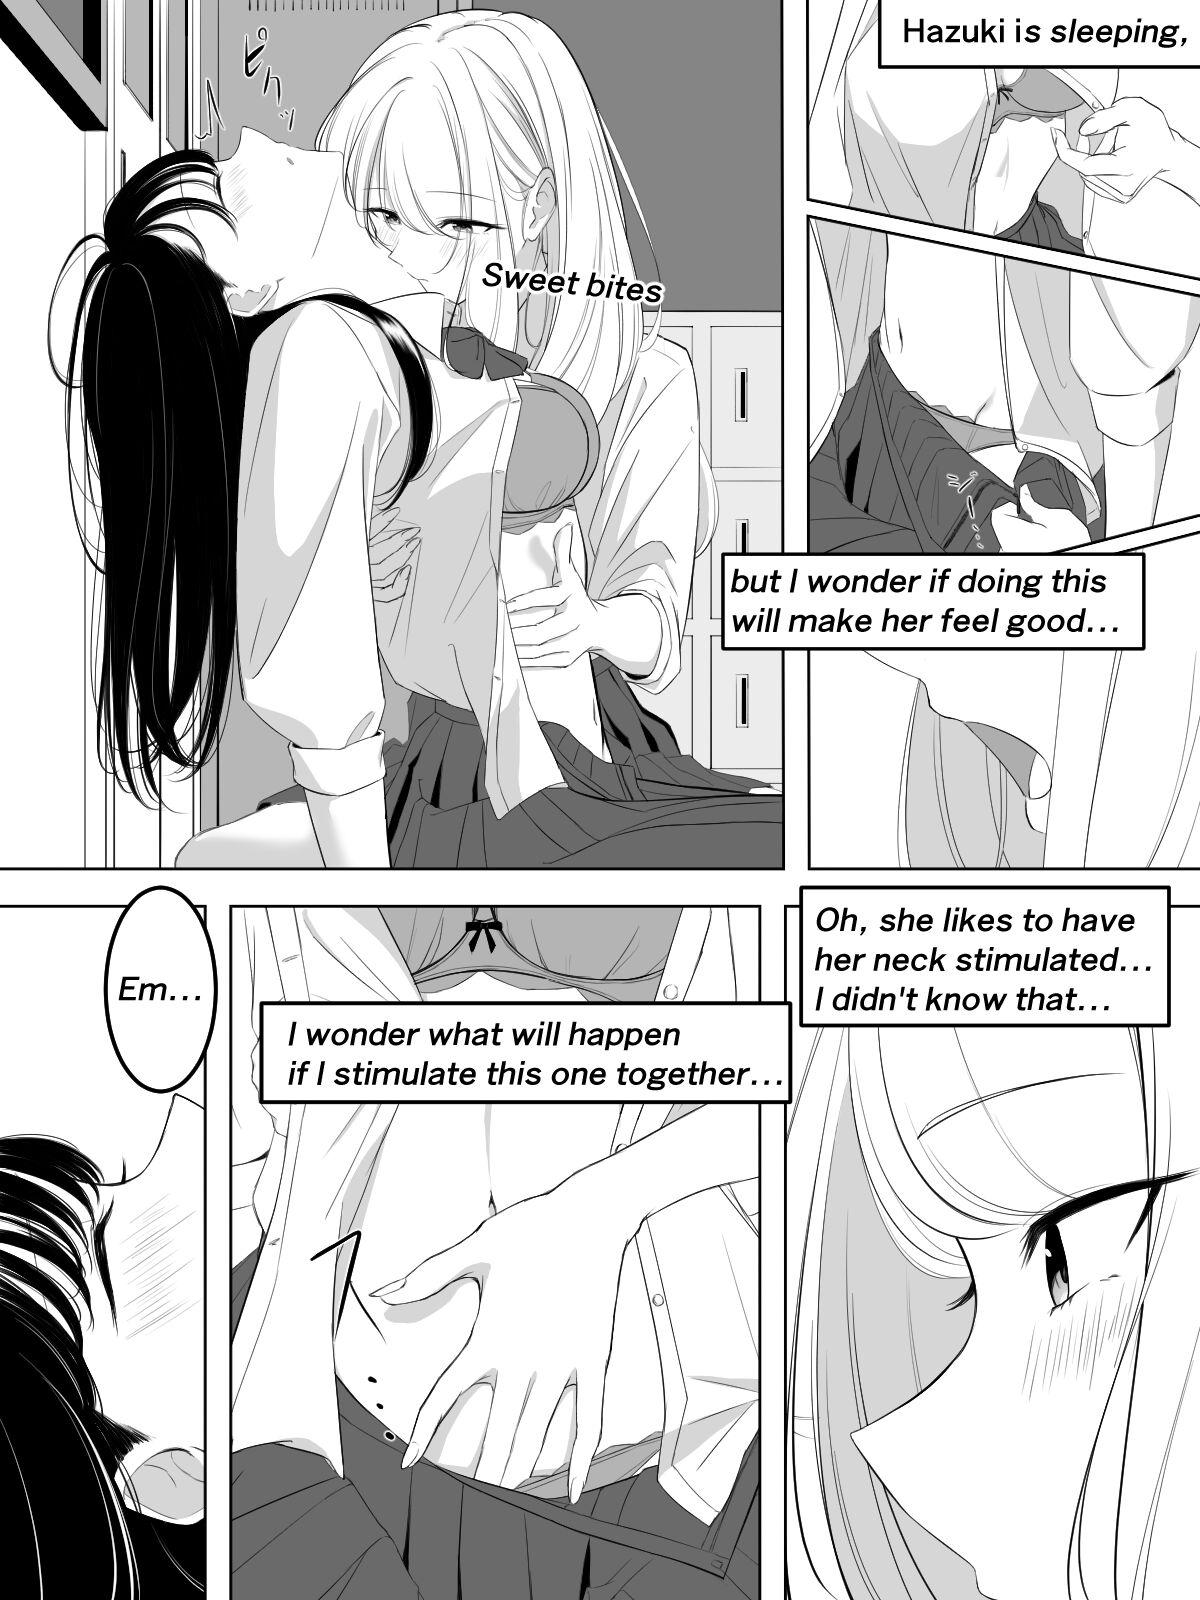 Yuri comic Part 1,2 and 3. 14